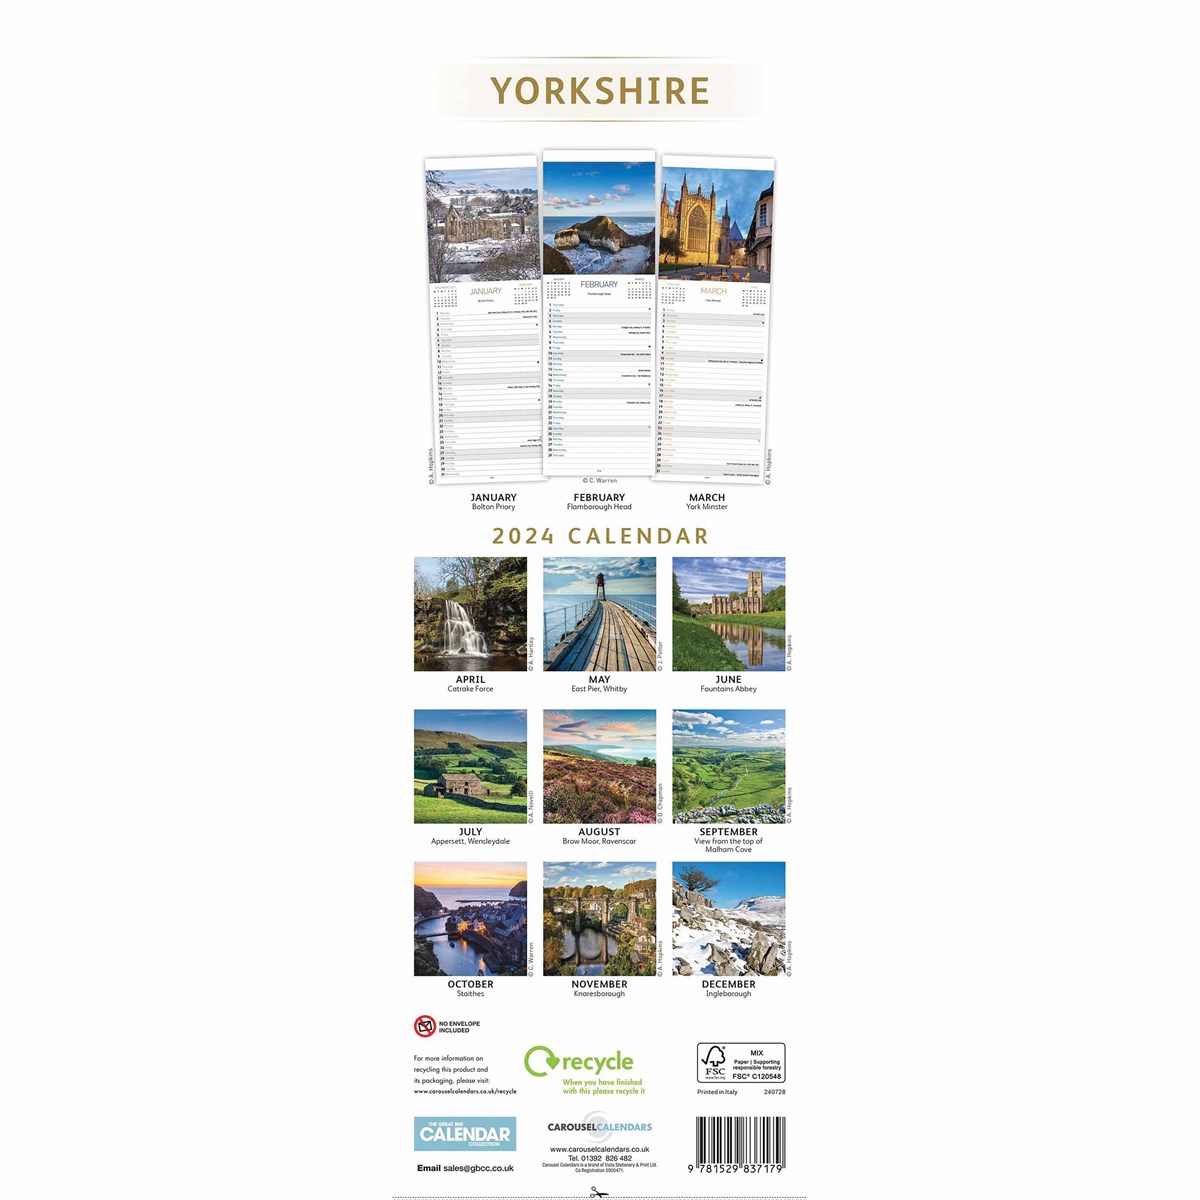 Yorkshire Slim Calendar 2024 by Carousel Calendars 240728